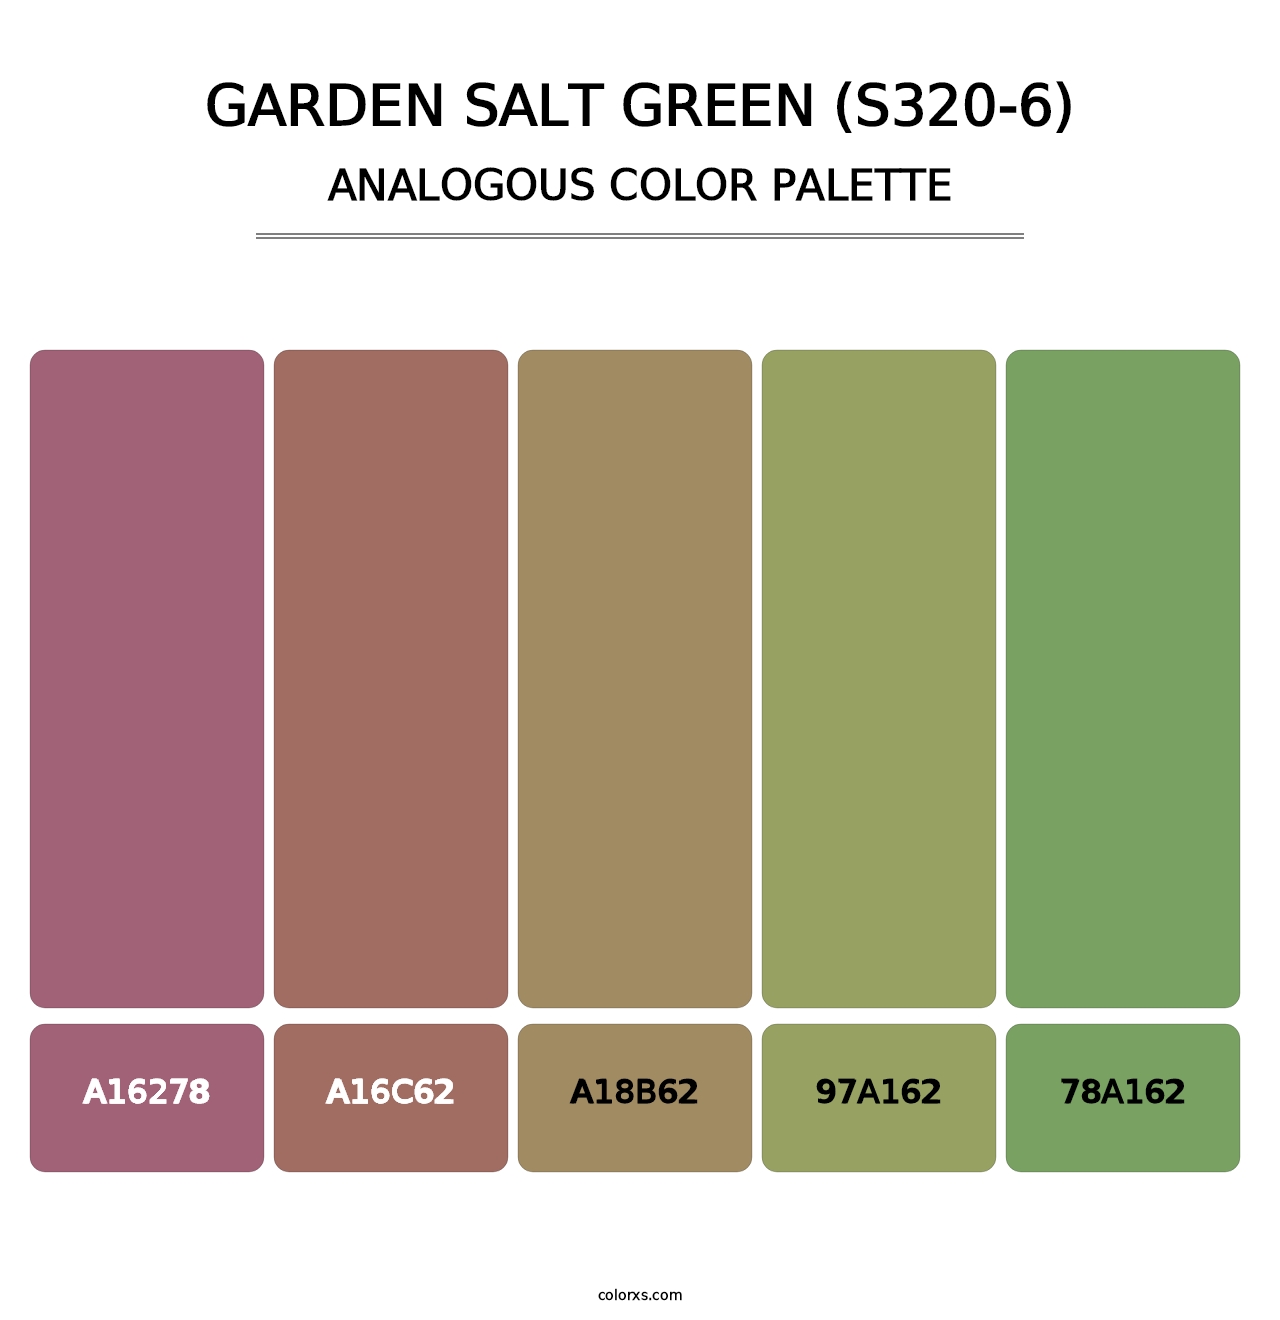 Garden Salt Green (S320-6) - Analogous Color Palette